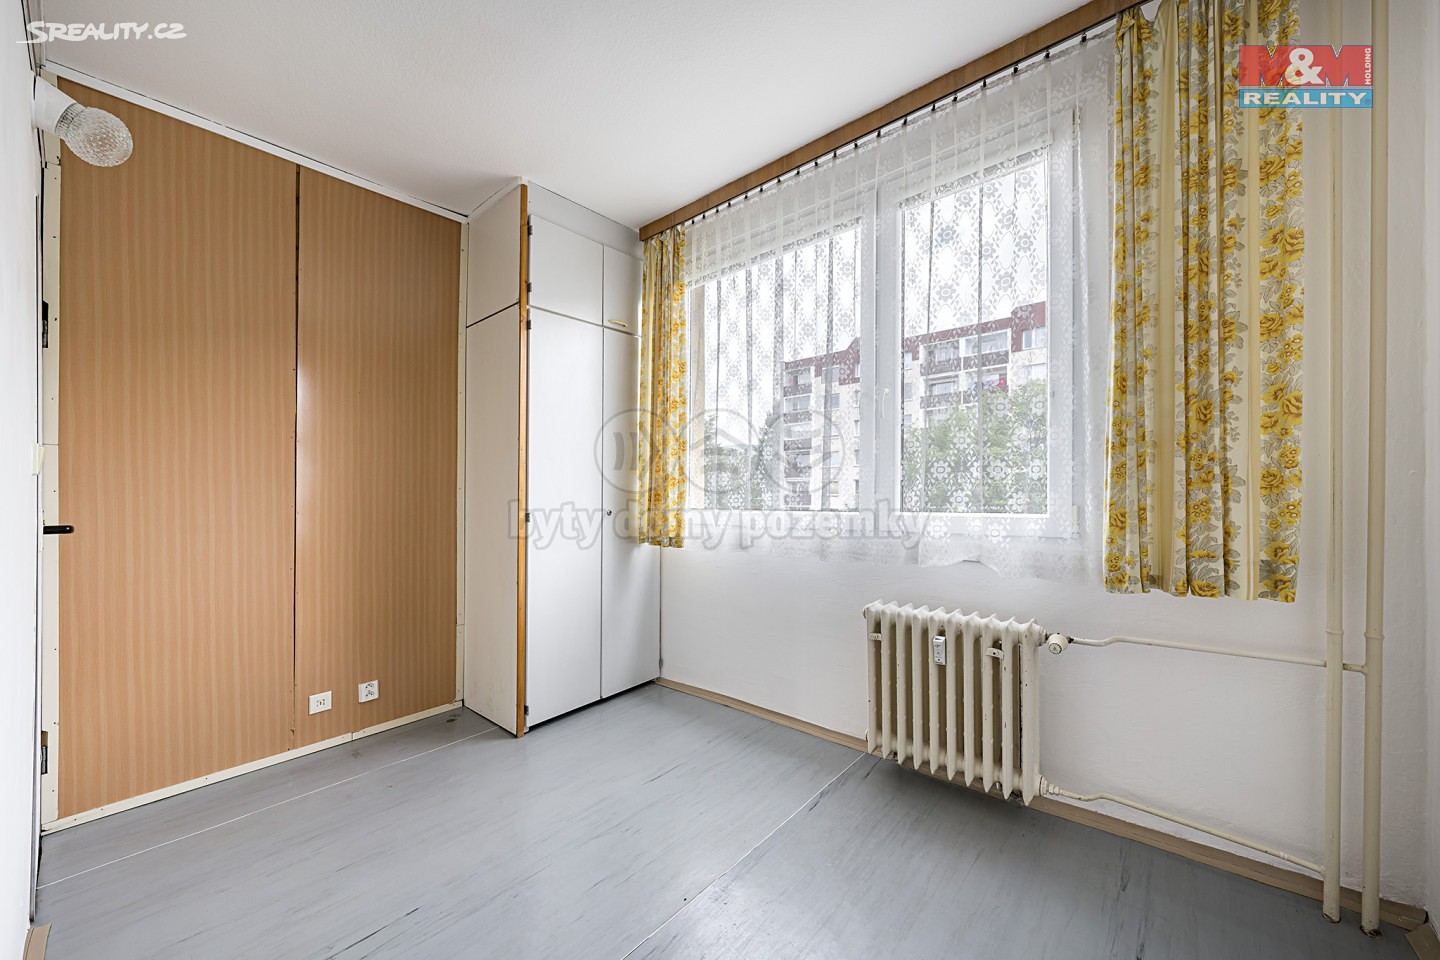 Prodej bytu 2+1 65 m², Švestková, Ústí nad Labem - Severní Terasa